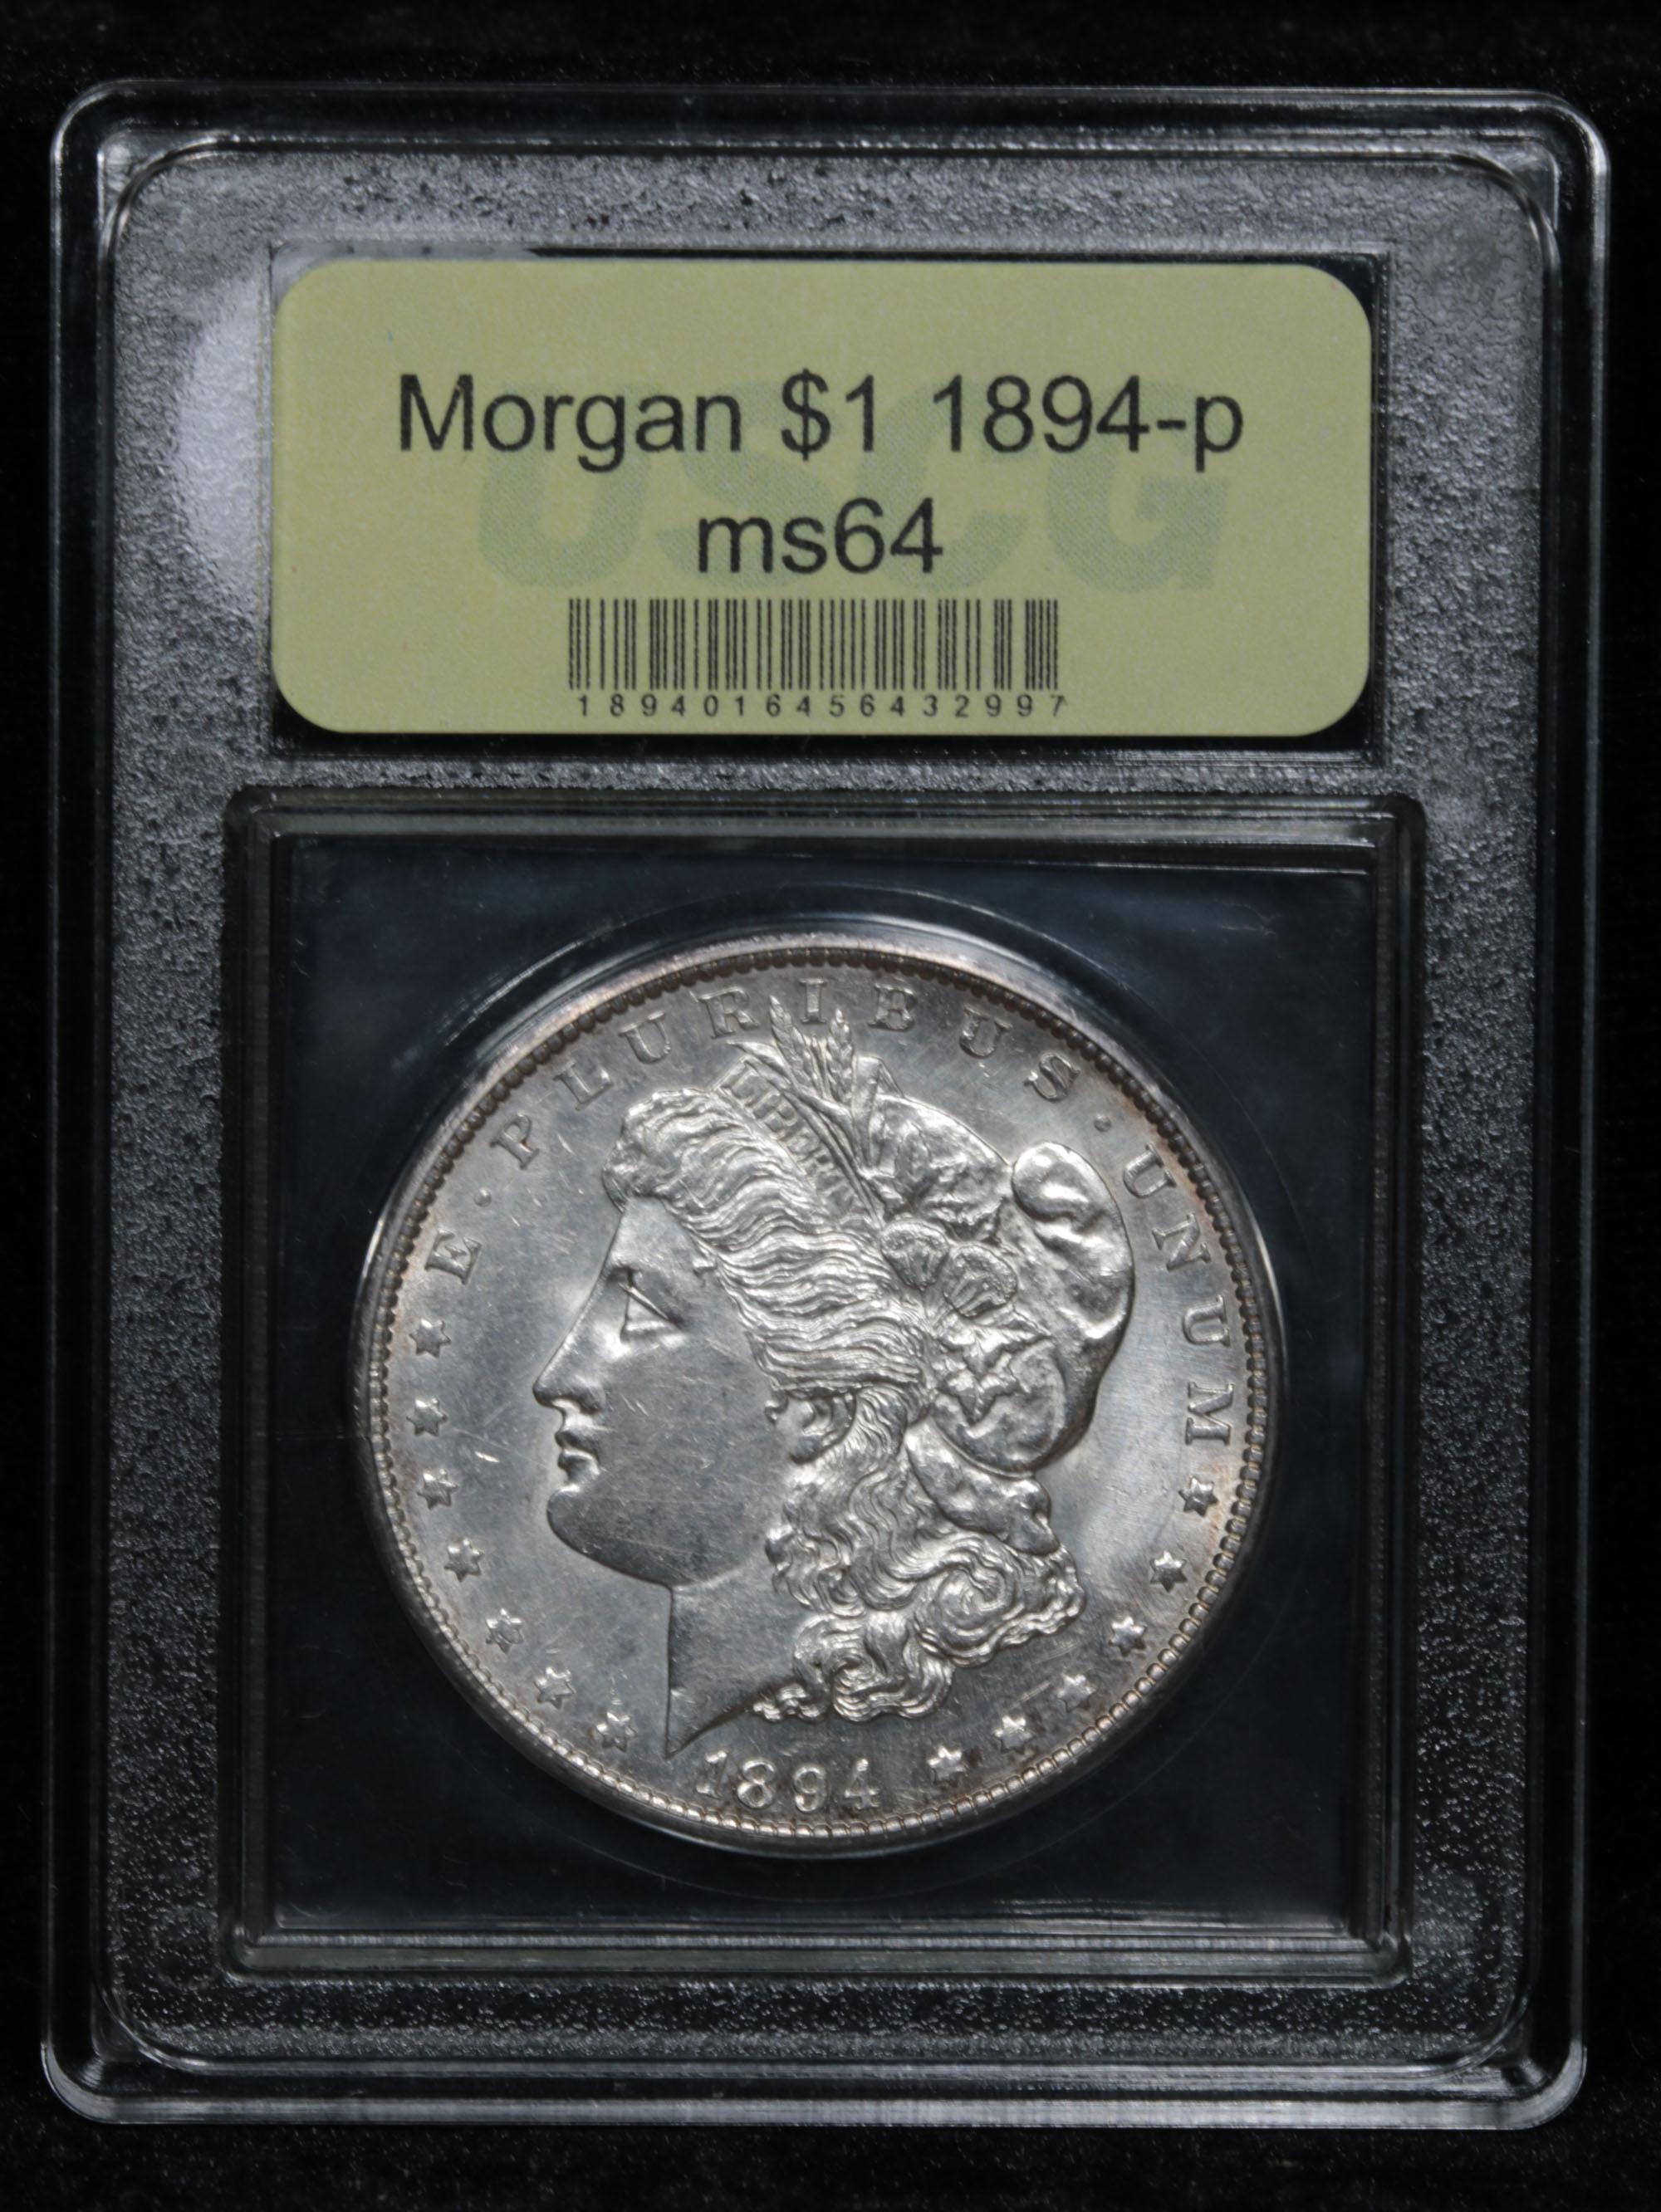 ***Auction Highlight*** 1894-p Morgan Dollar $1 Graded Choice Unc By USCG (fc)